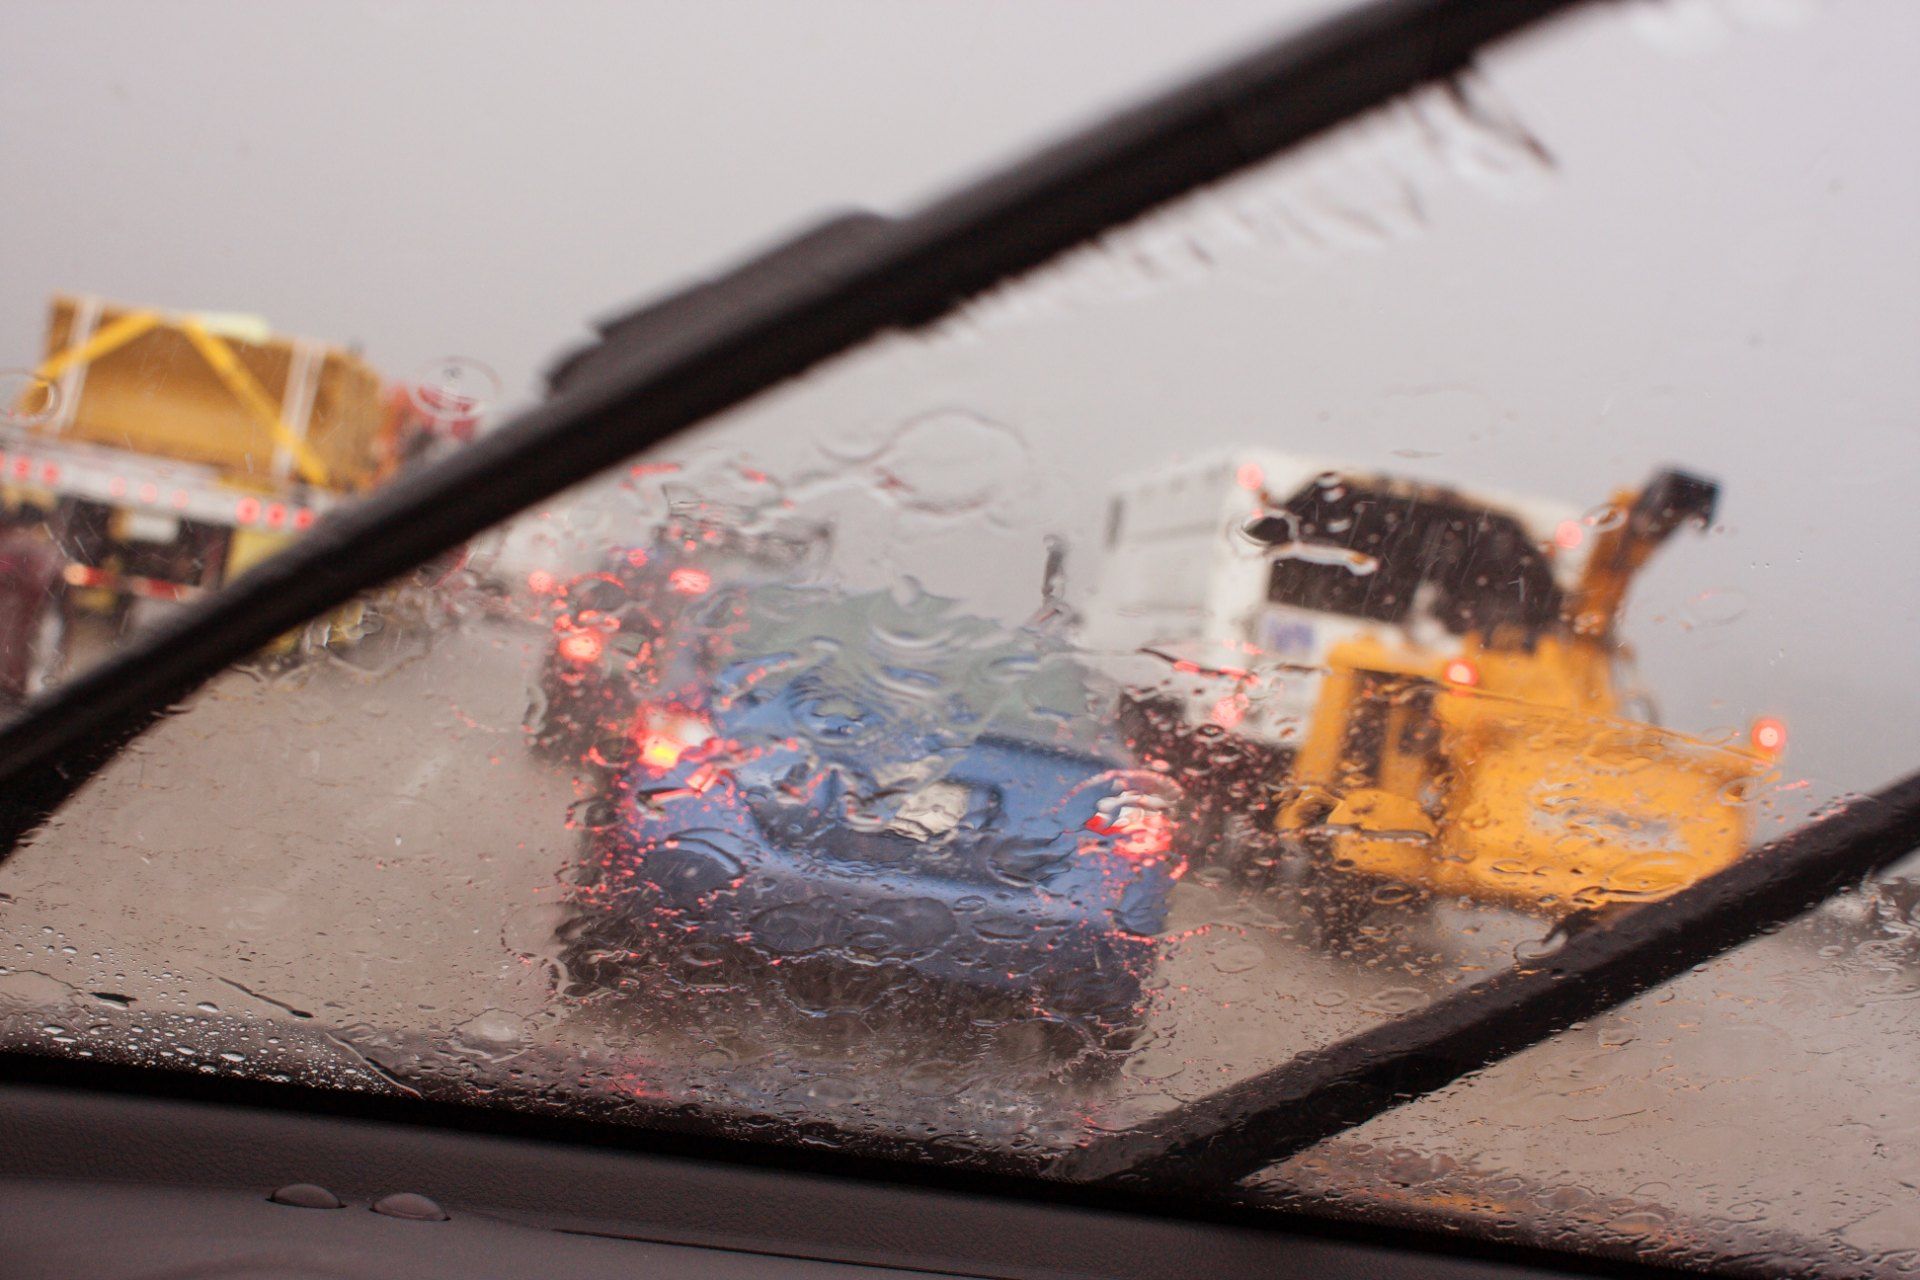 Traffic is seen through windshield as wipers clear rain - windscreen wiper defect